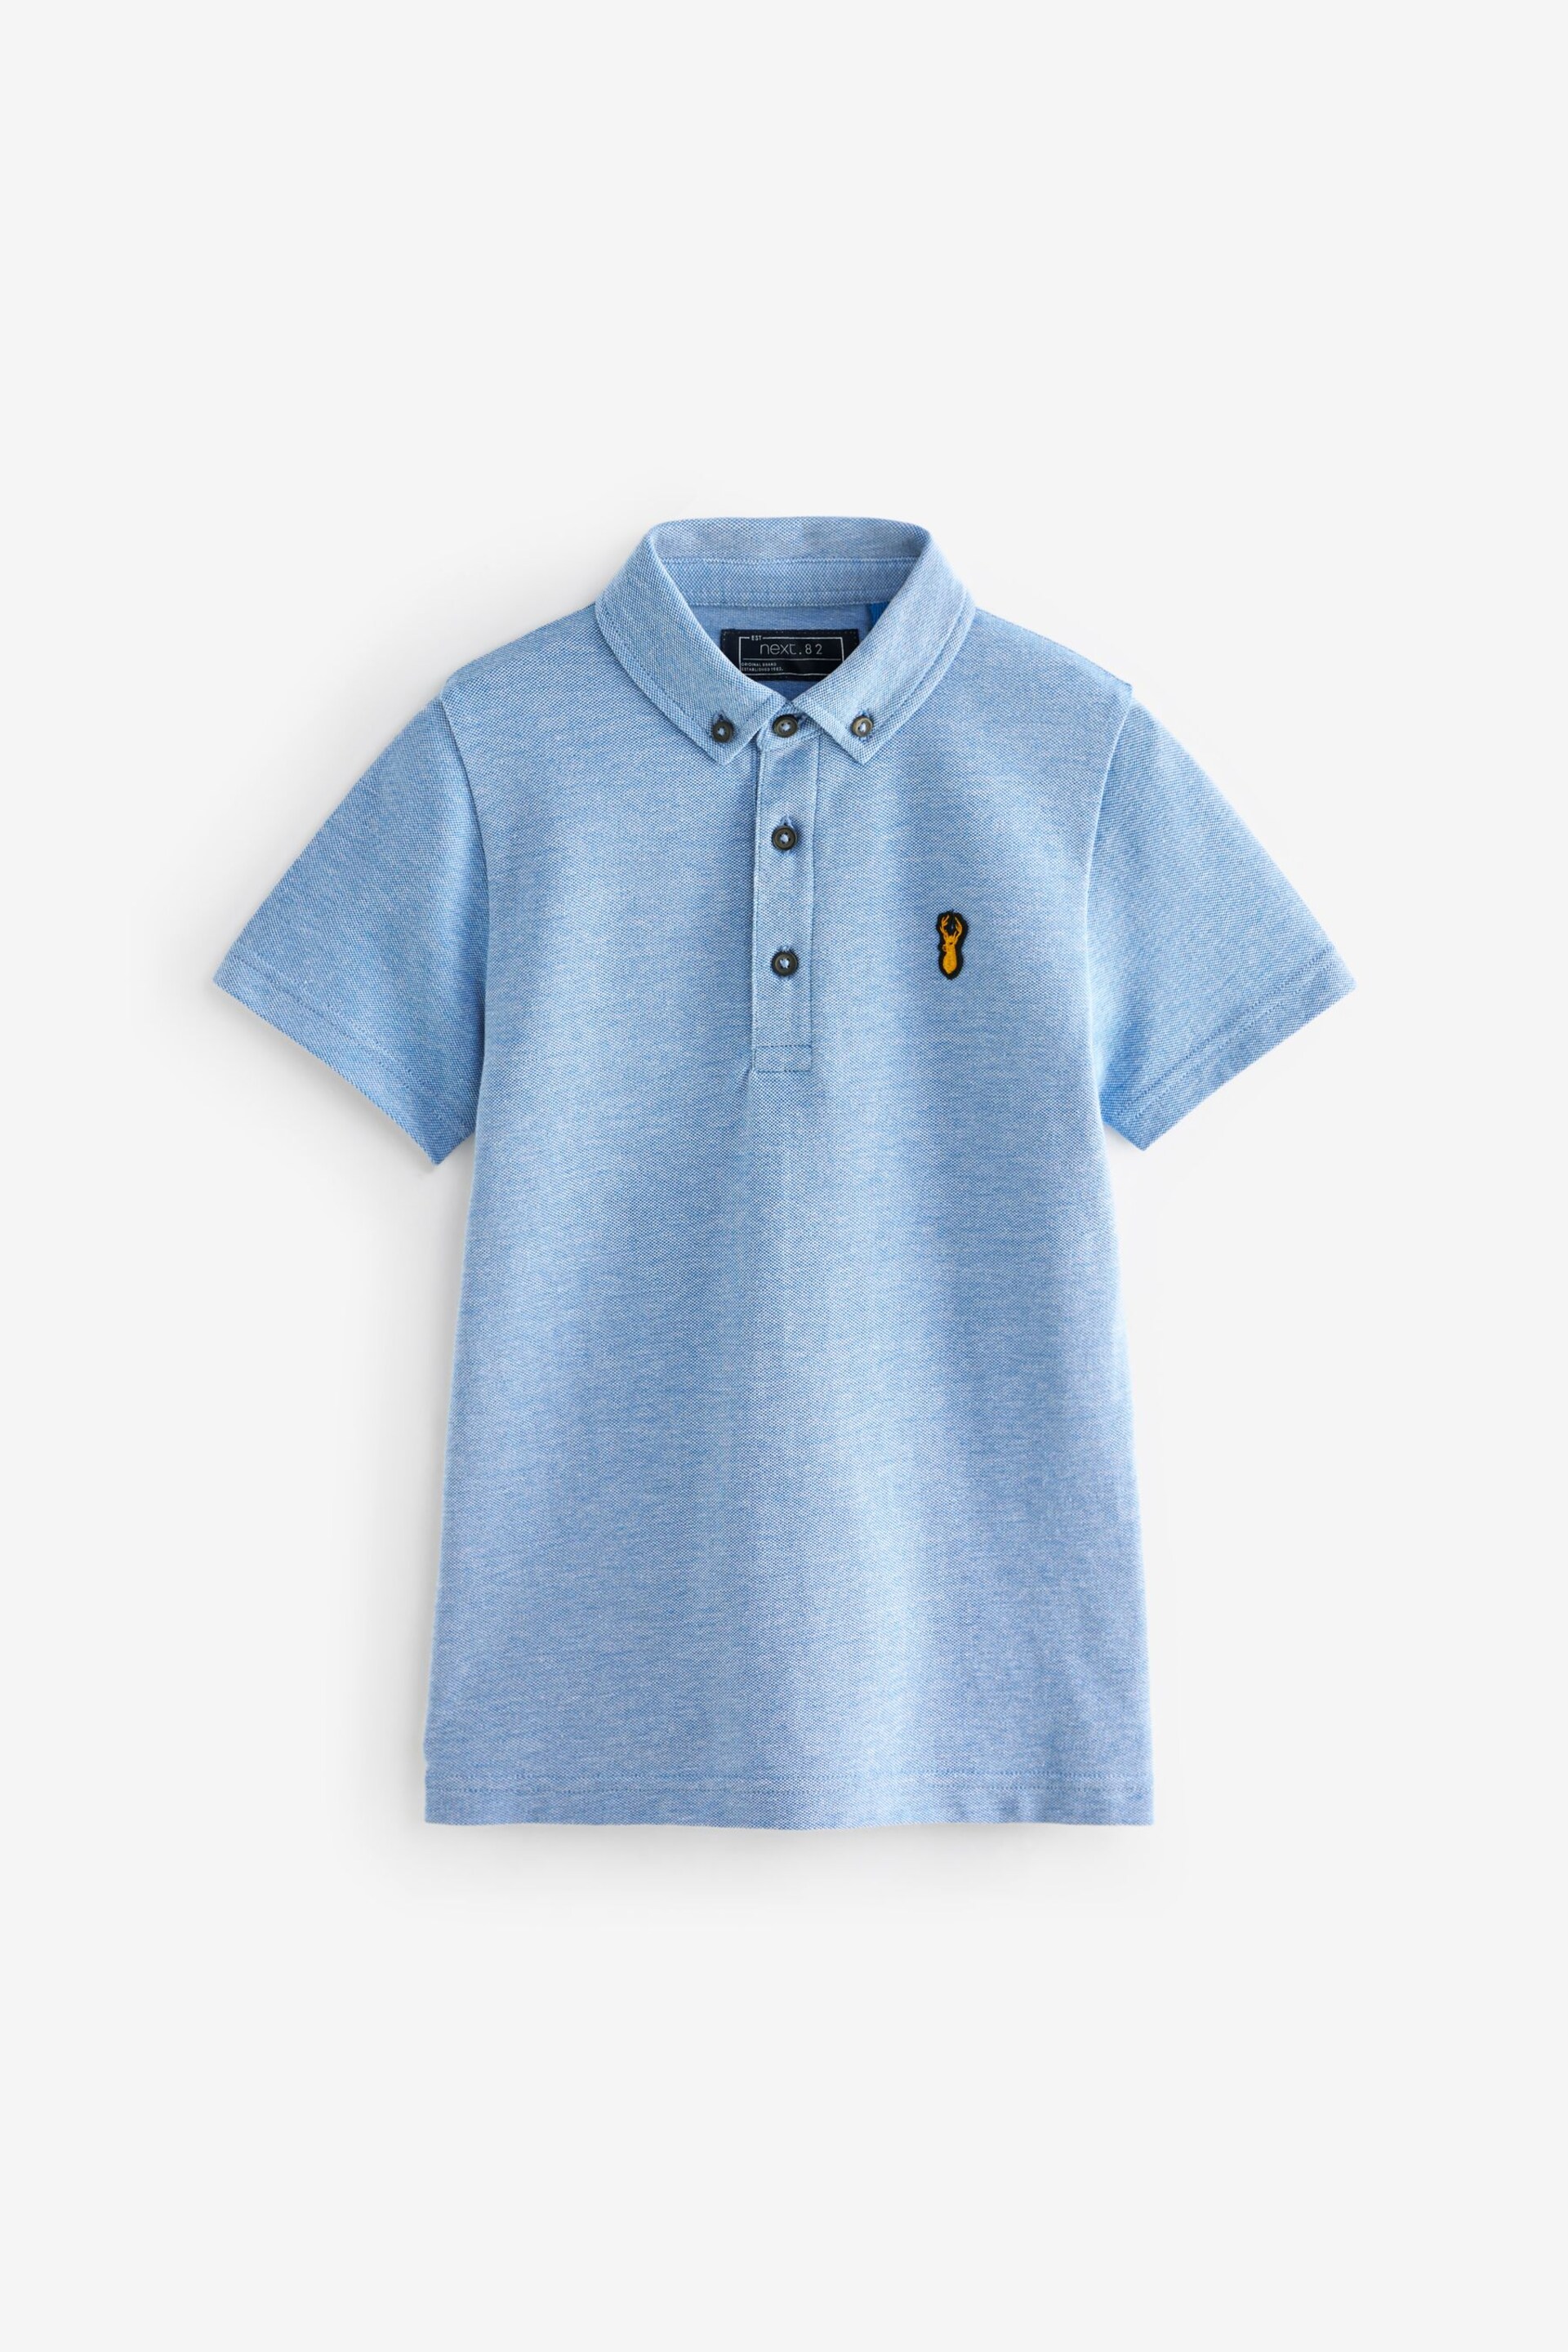 Blue Marl Short Sleeve Polo Shirt (3-16yrs) - Image 1 of 3